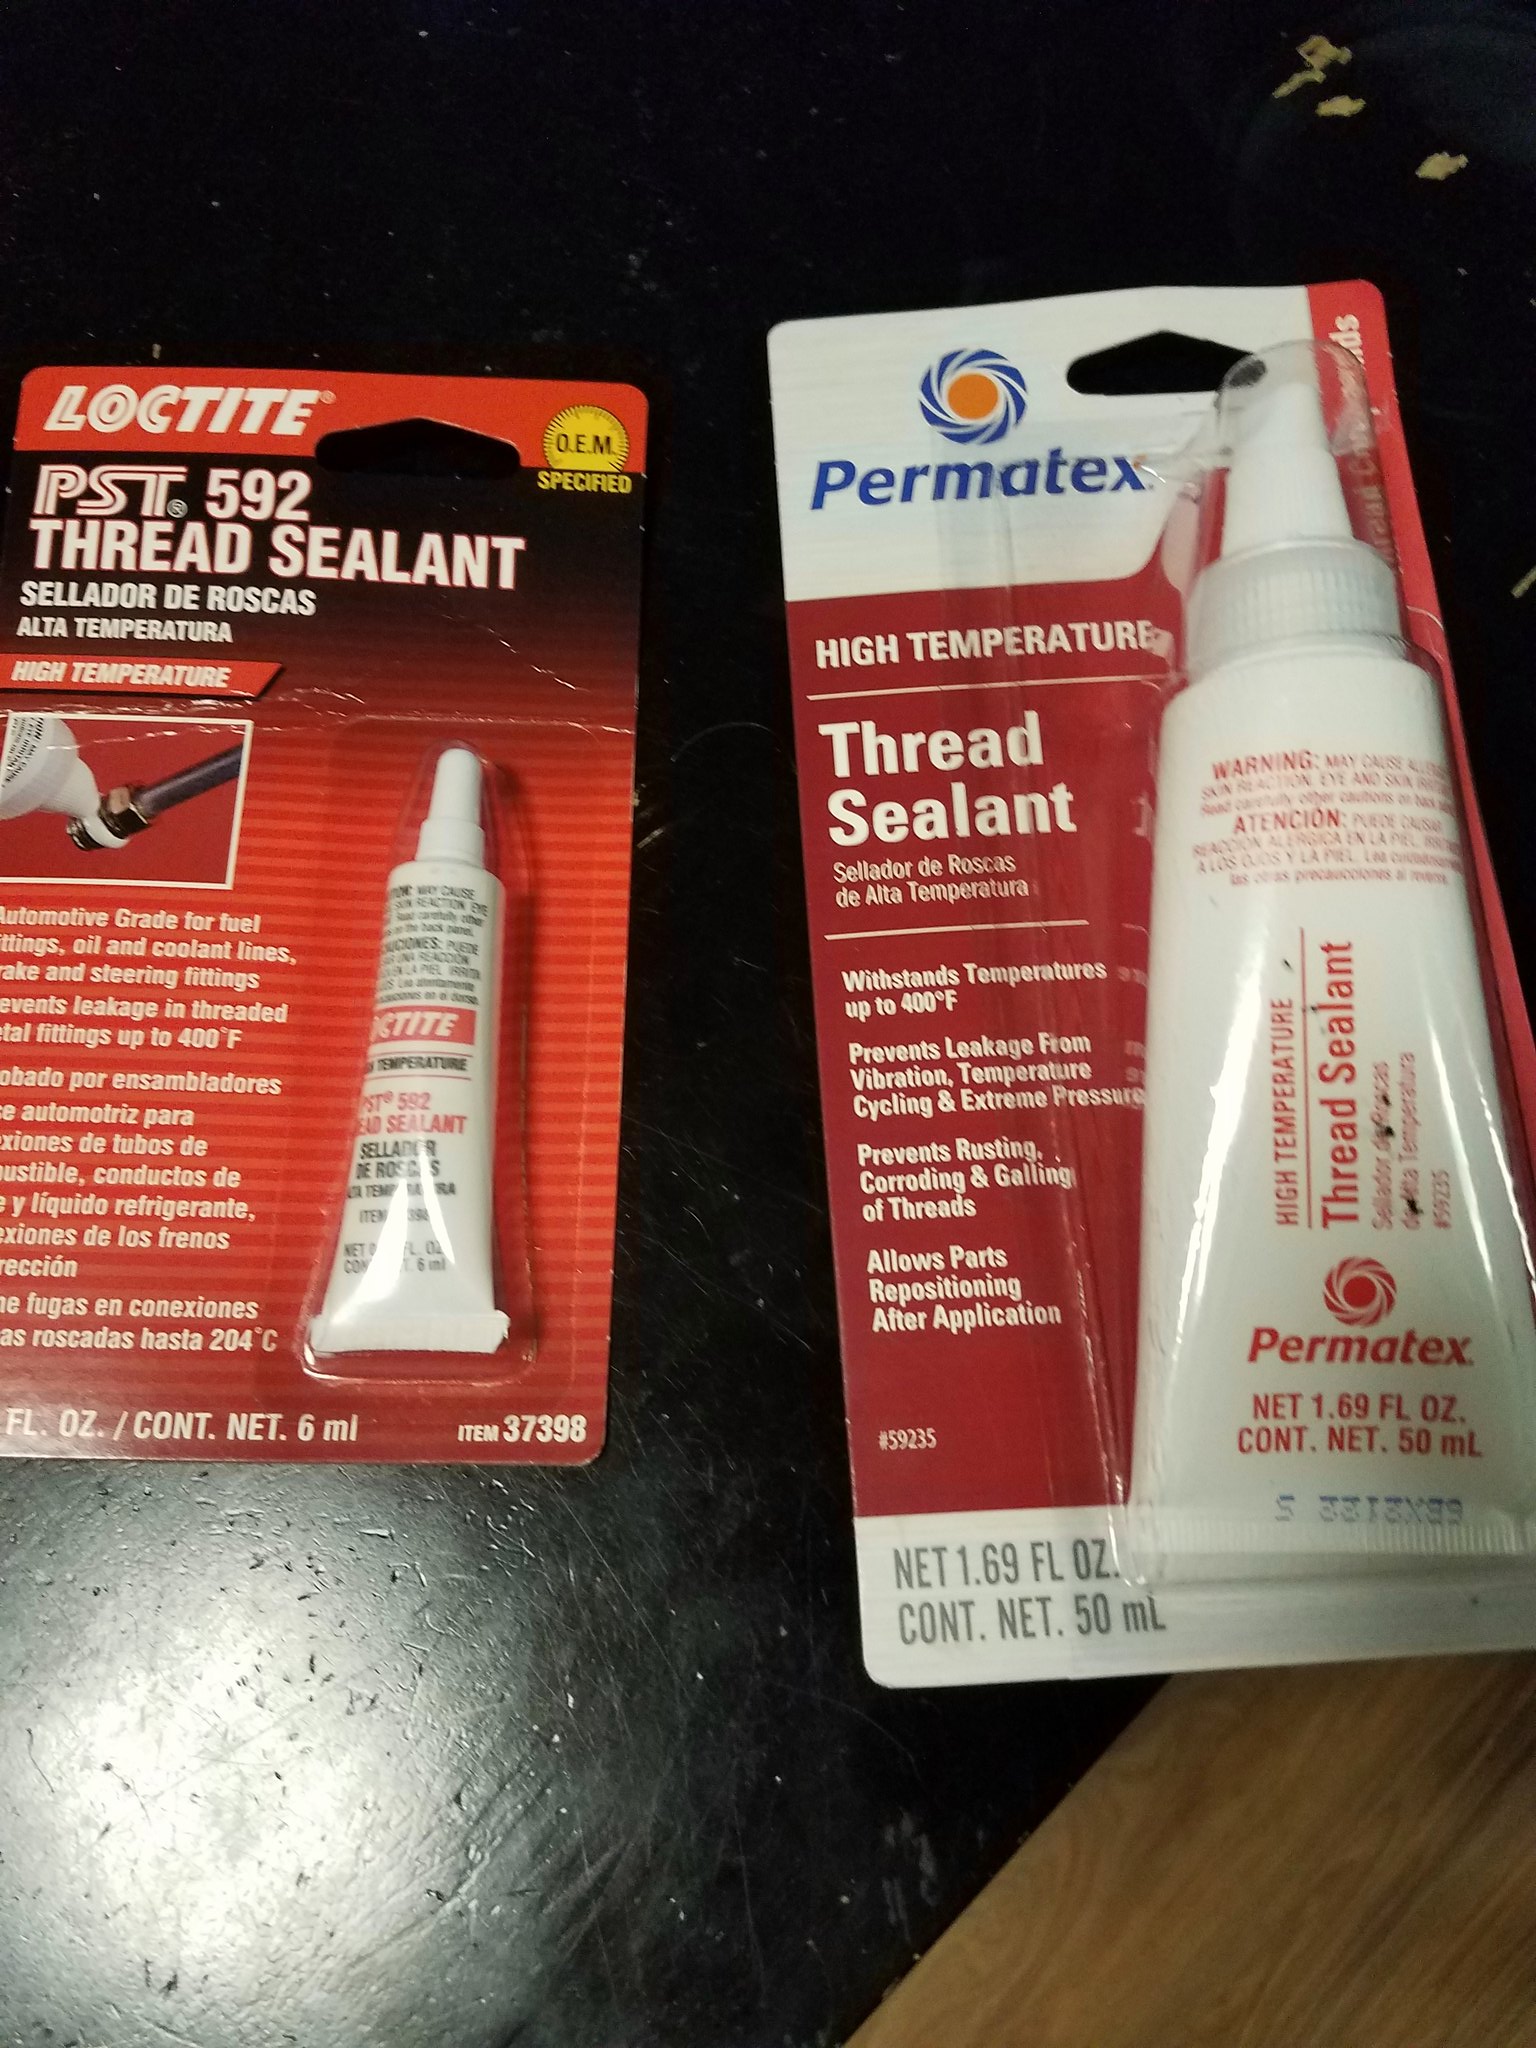 Permatex No. 14 Thread Sealant with PTFE